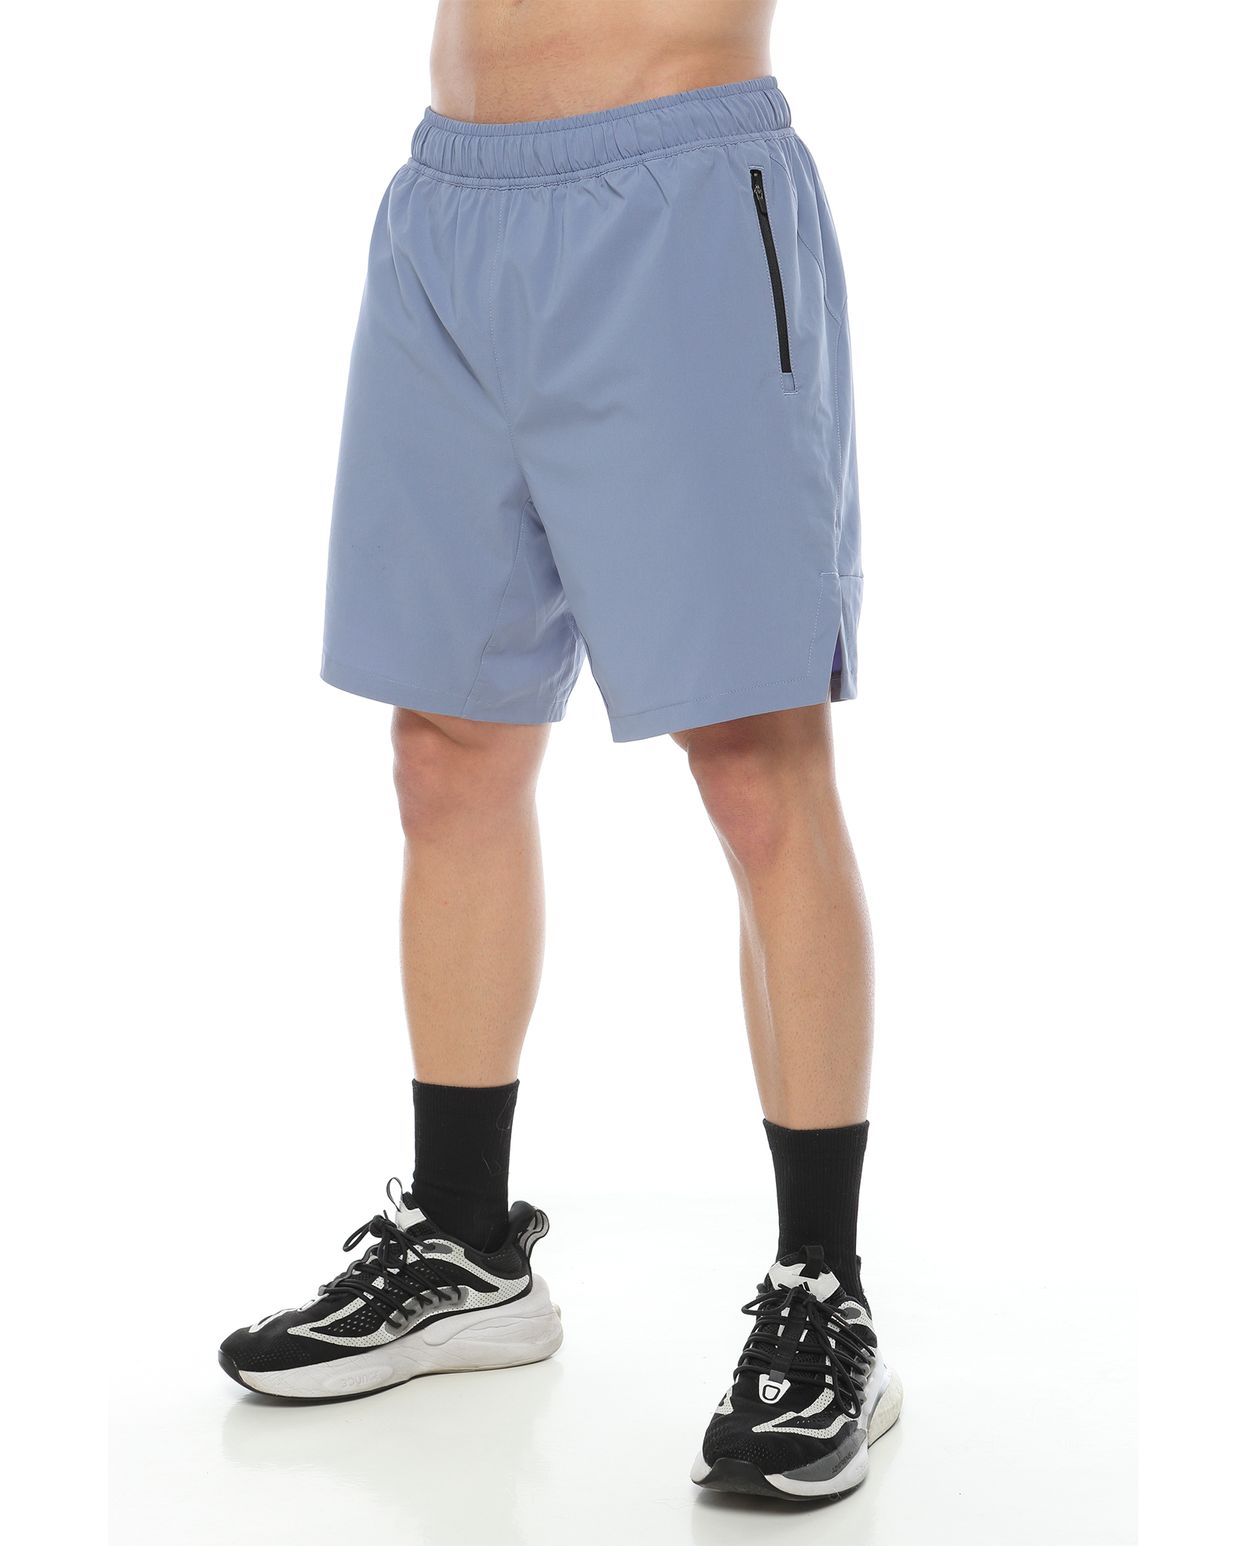 Pantaloneta deportiva hombre, color negro - racketball movil